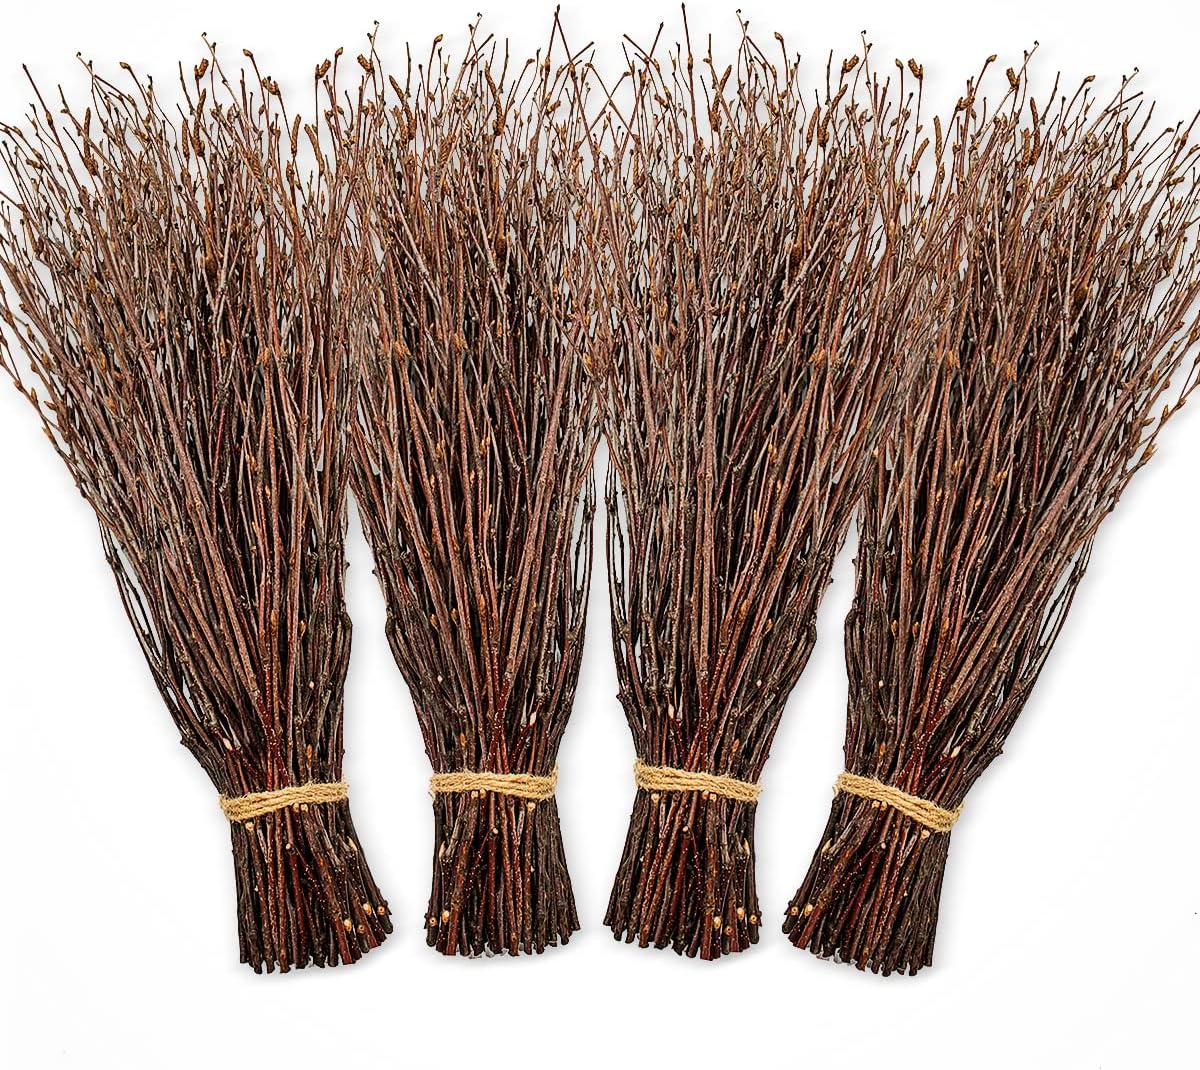 Bulk 200 Psc Natural Dried Birch Twig Sticks Ideal for DIY Crafts Flower Arrangements Vases Halloween Decorations and Home Floral Displays Wholesale